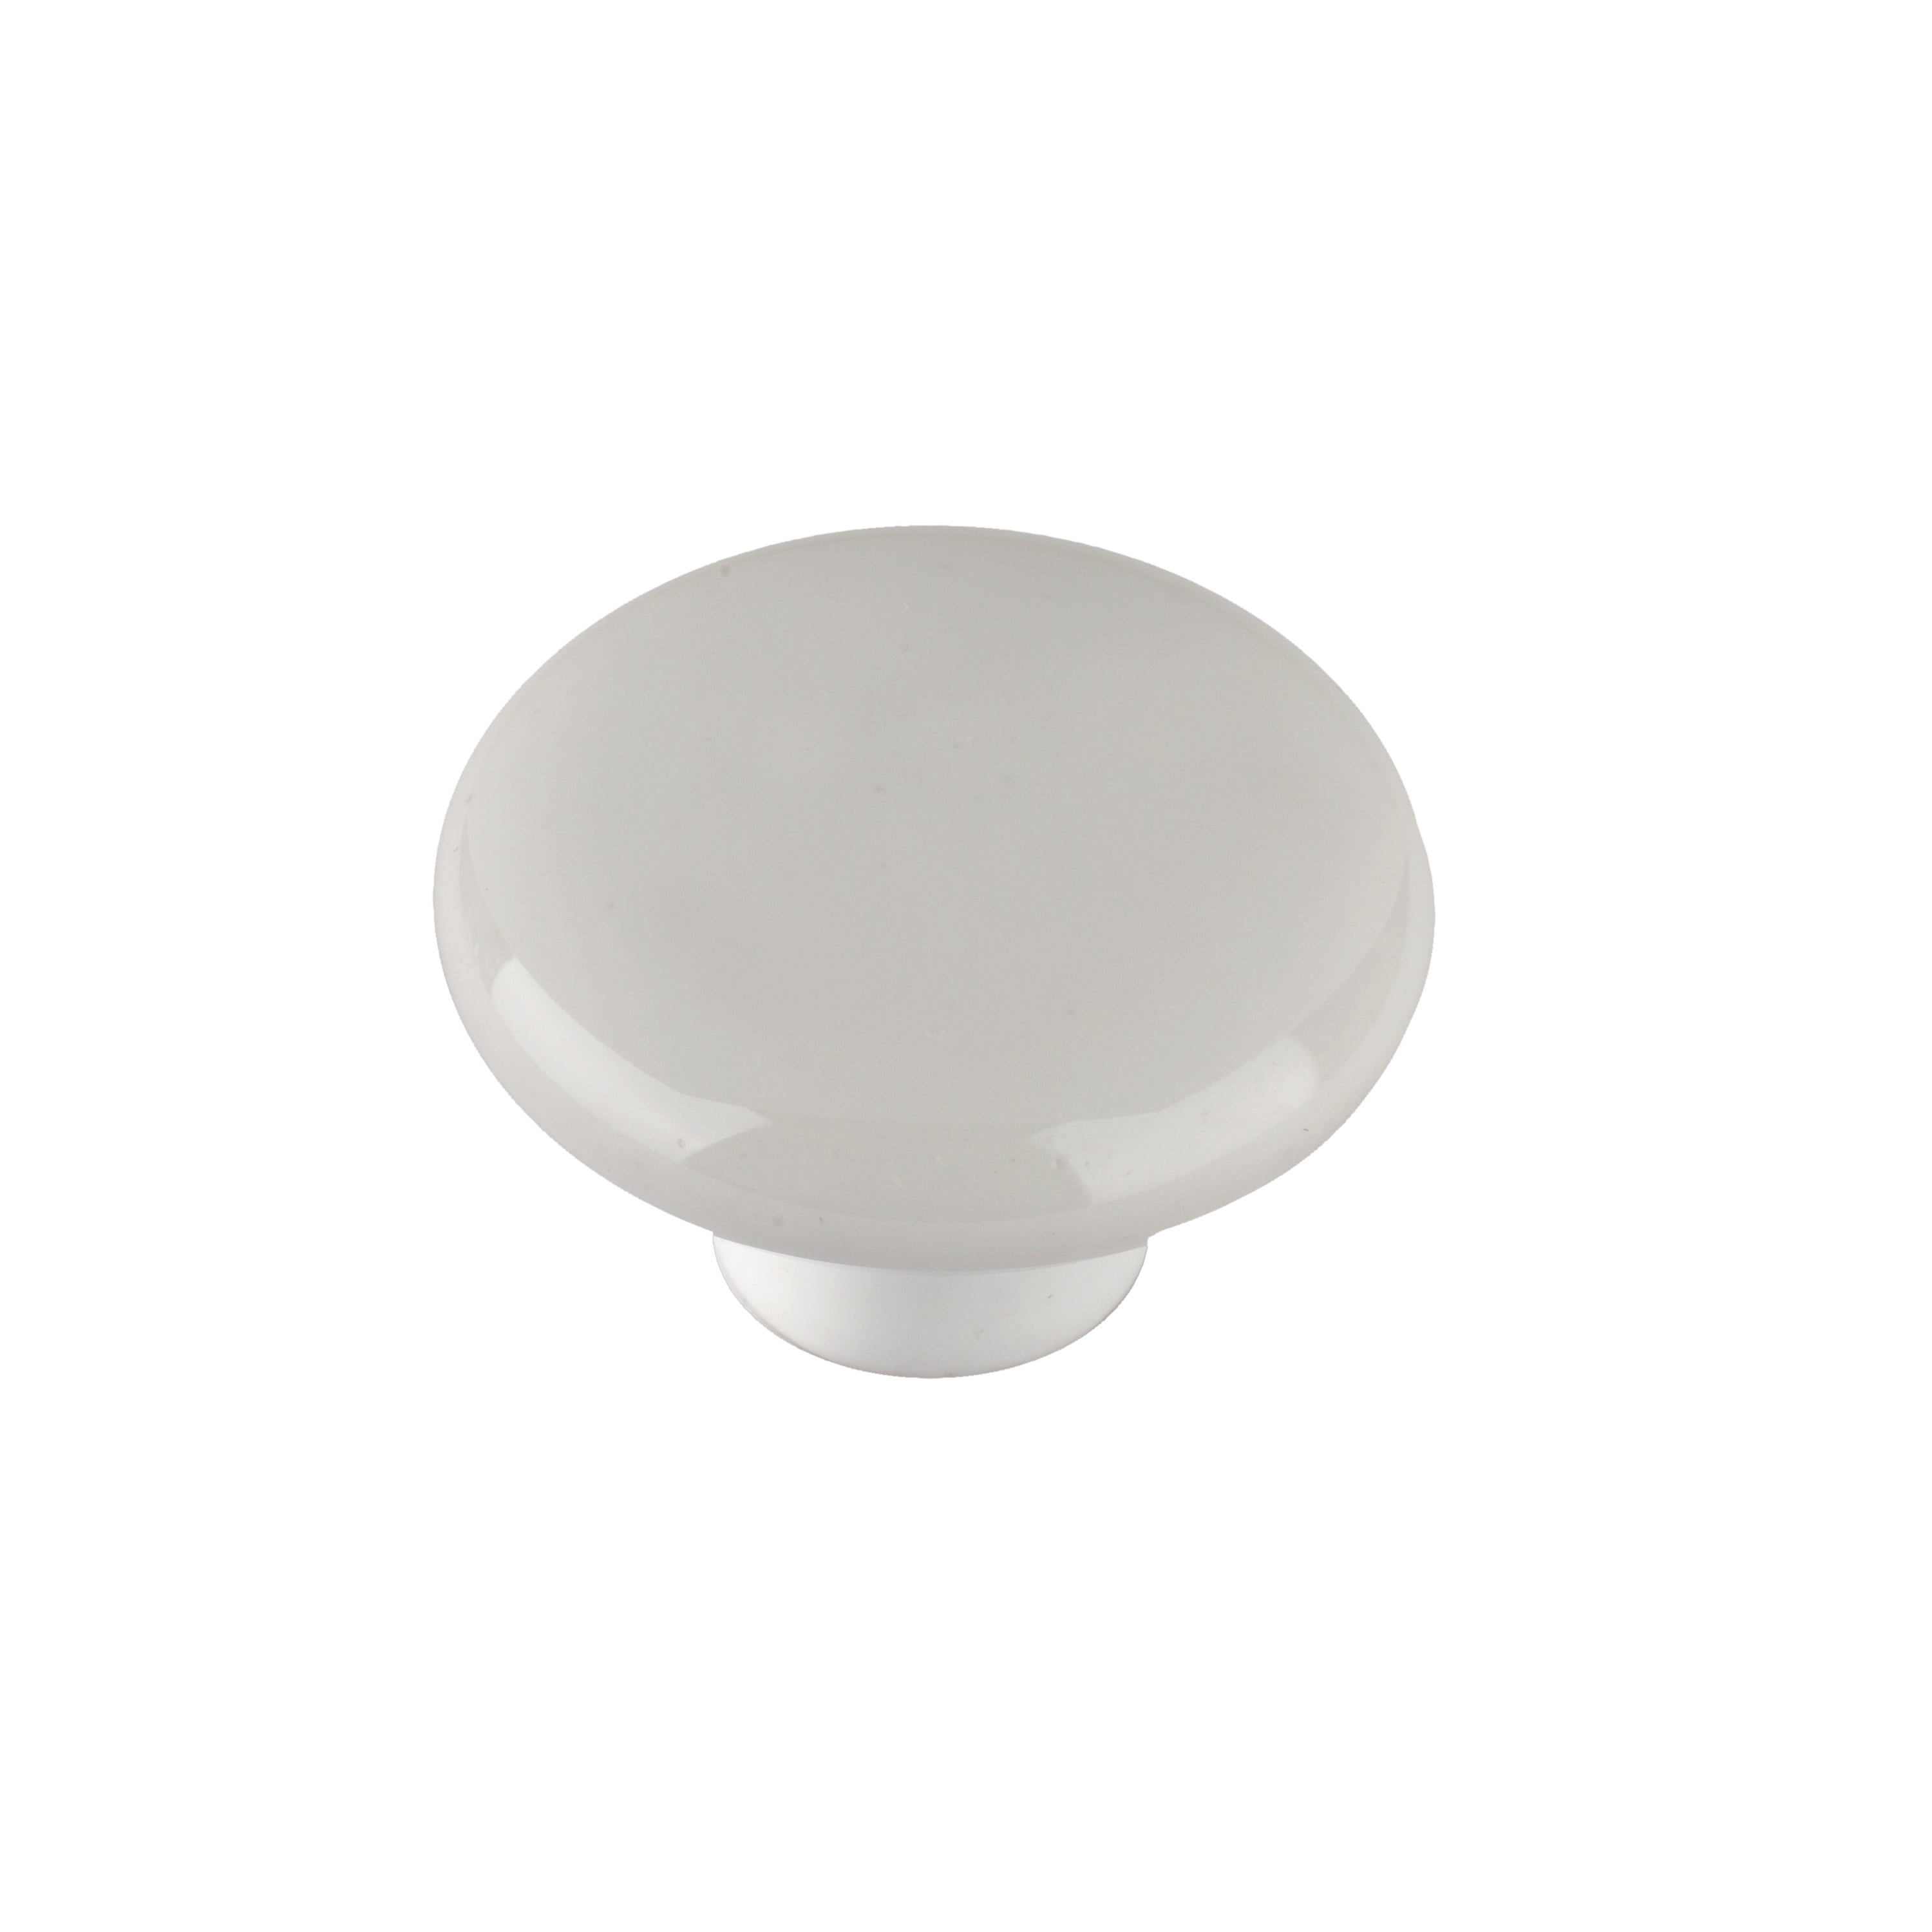 Mainstays 1-1/4" (32mm) Cabinet Knob, White Plastic, 2 Pack